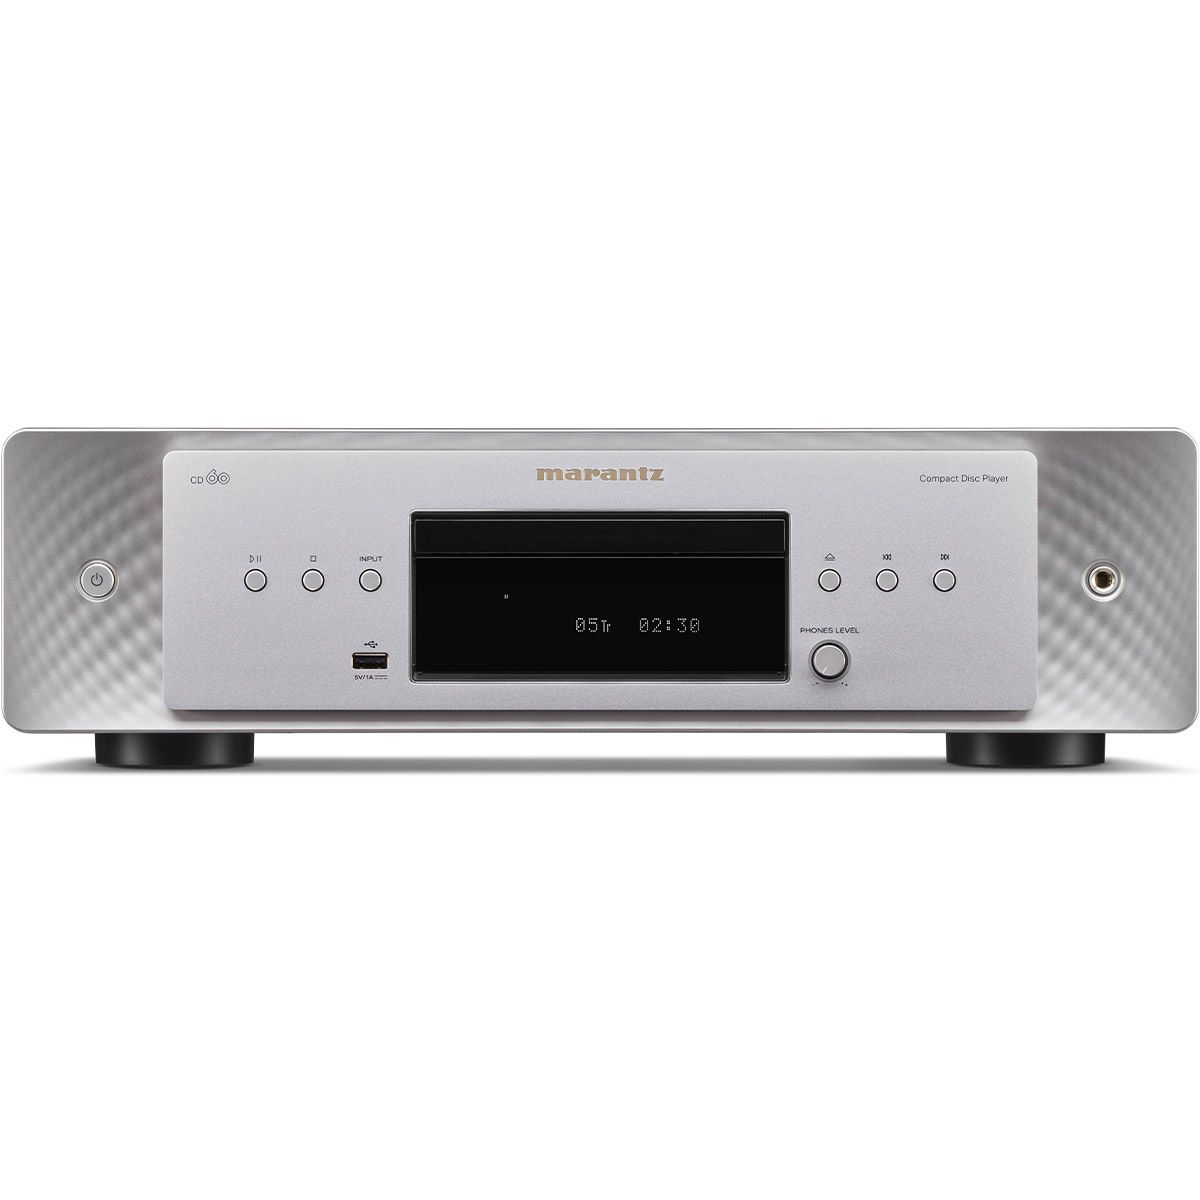 Marantz CD60 CD Player - Silver - front view